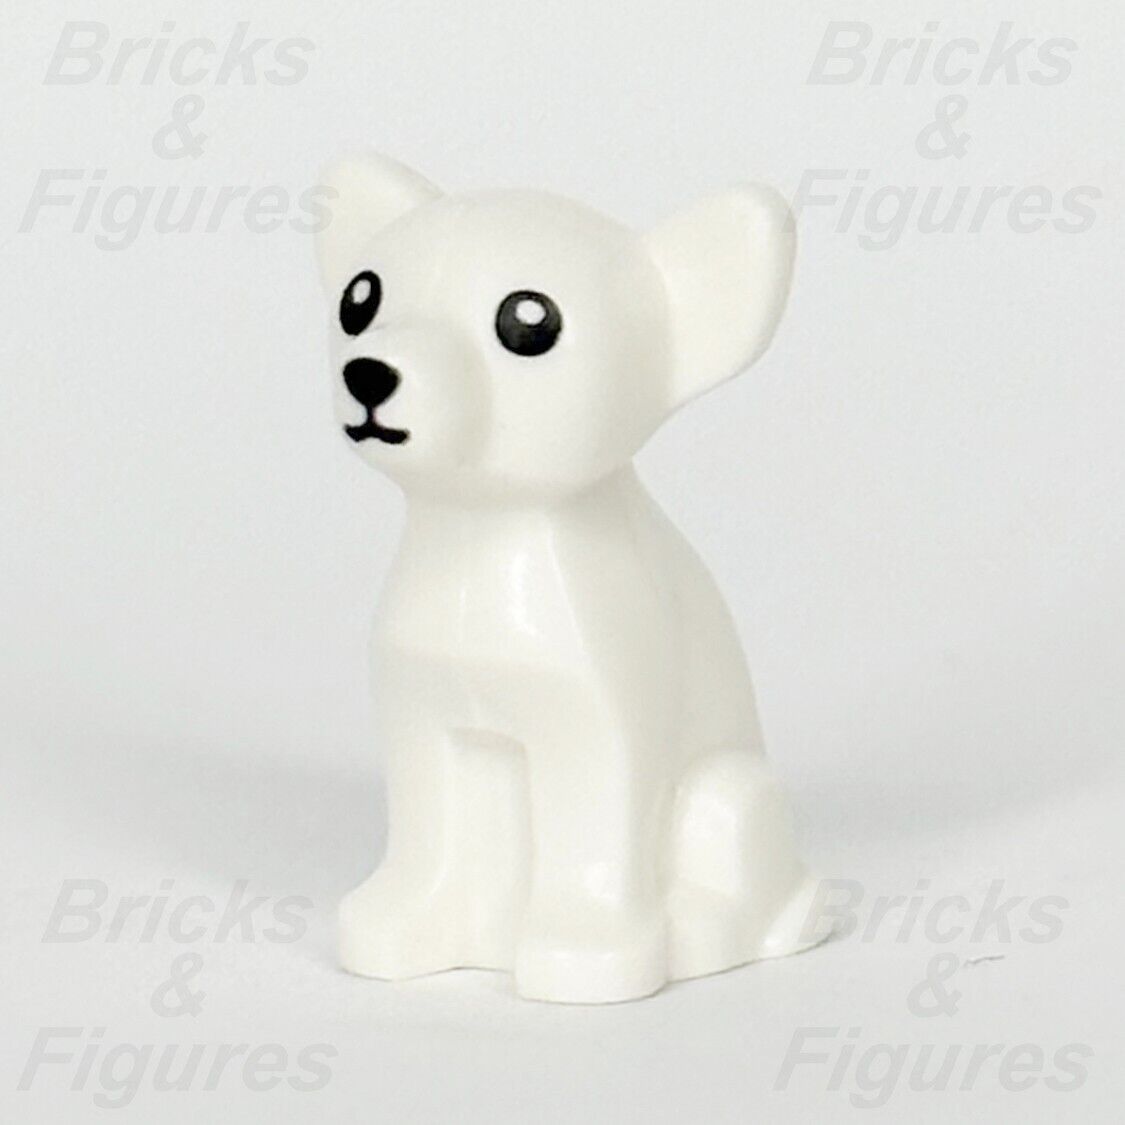 LEGO White Chihuahua Small Dog Animal Part Black Eyes Sitting 71037 12888pb01 - Bricks & Figures